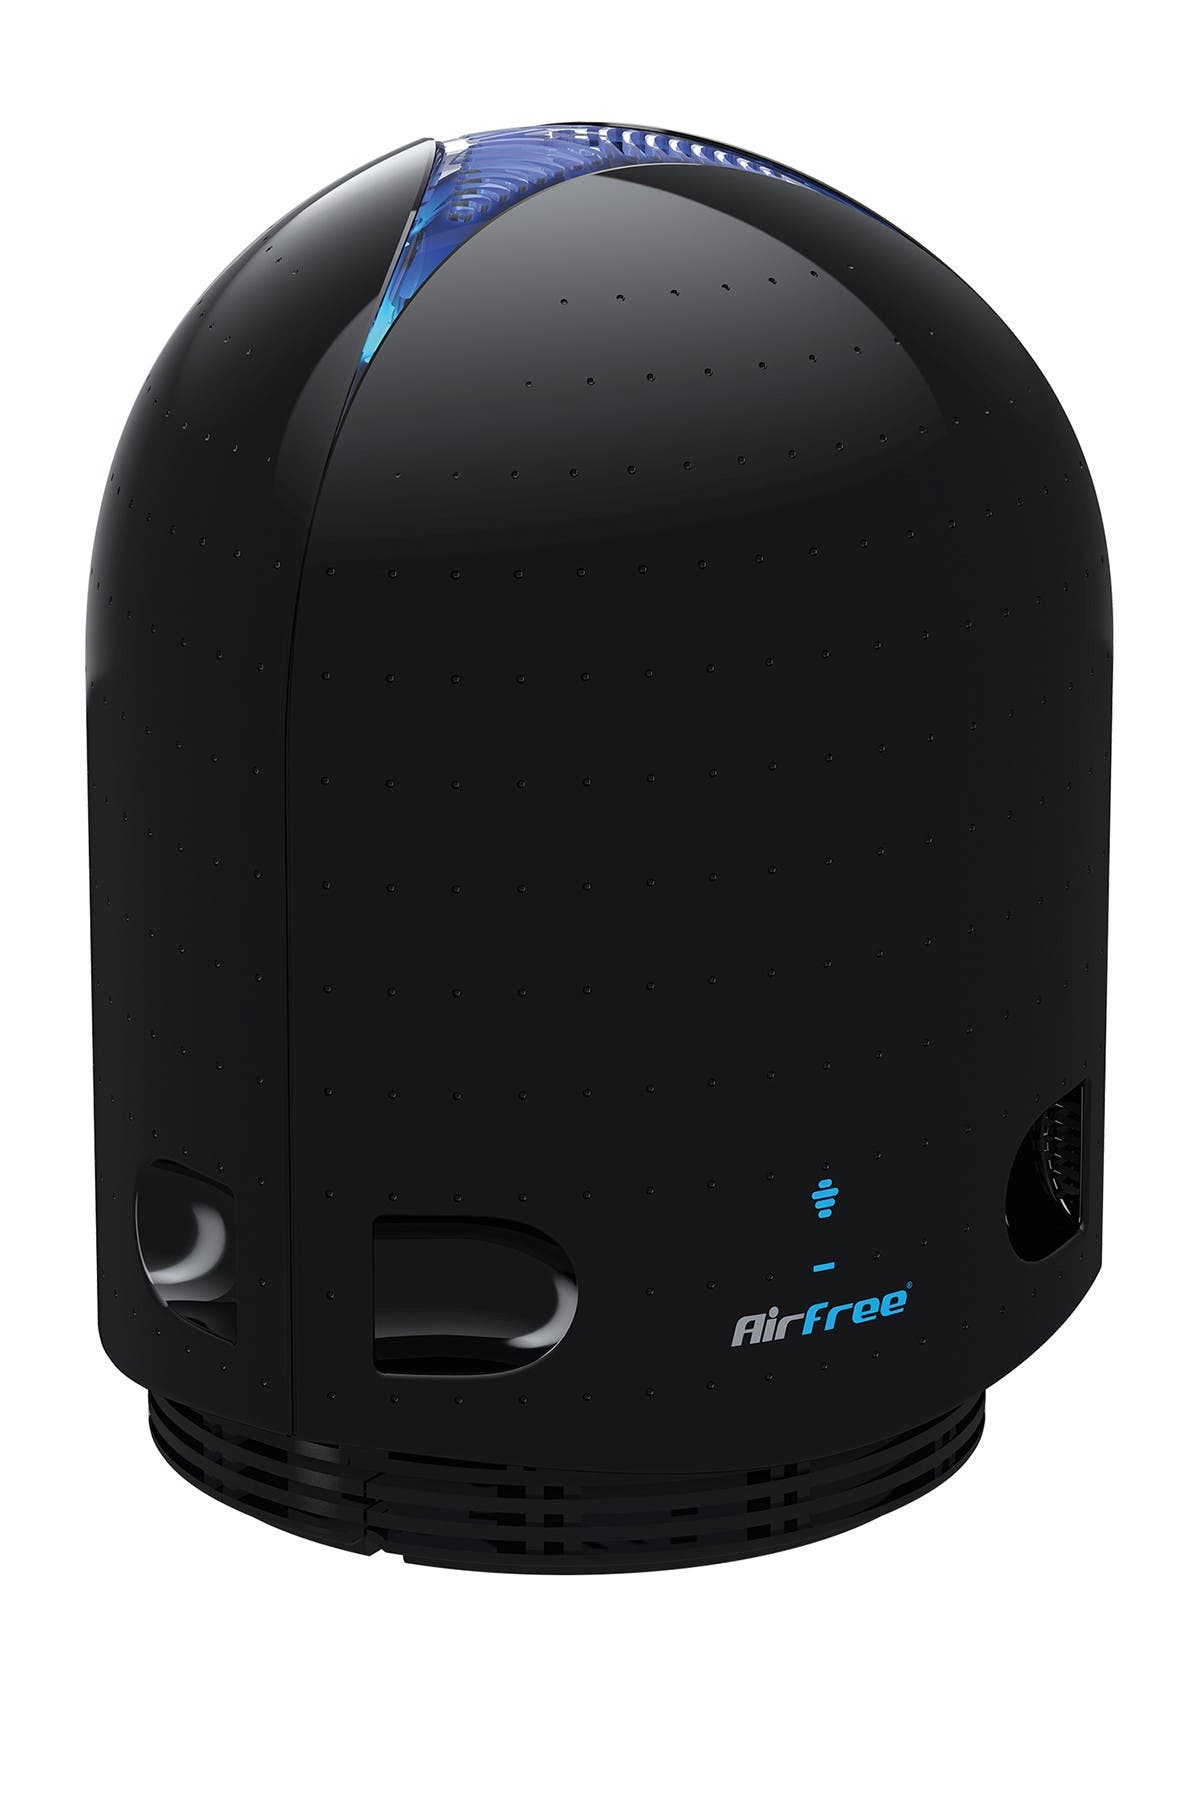 Airfree P3000 Filterless Air Purifier In Black